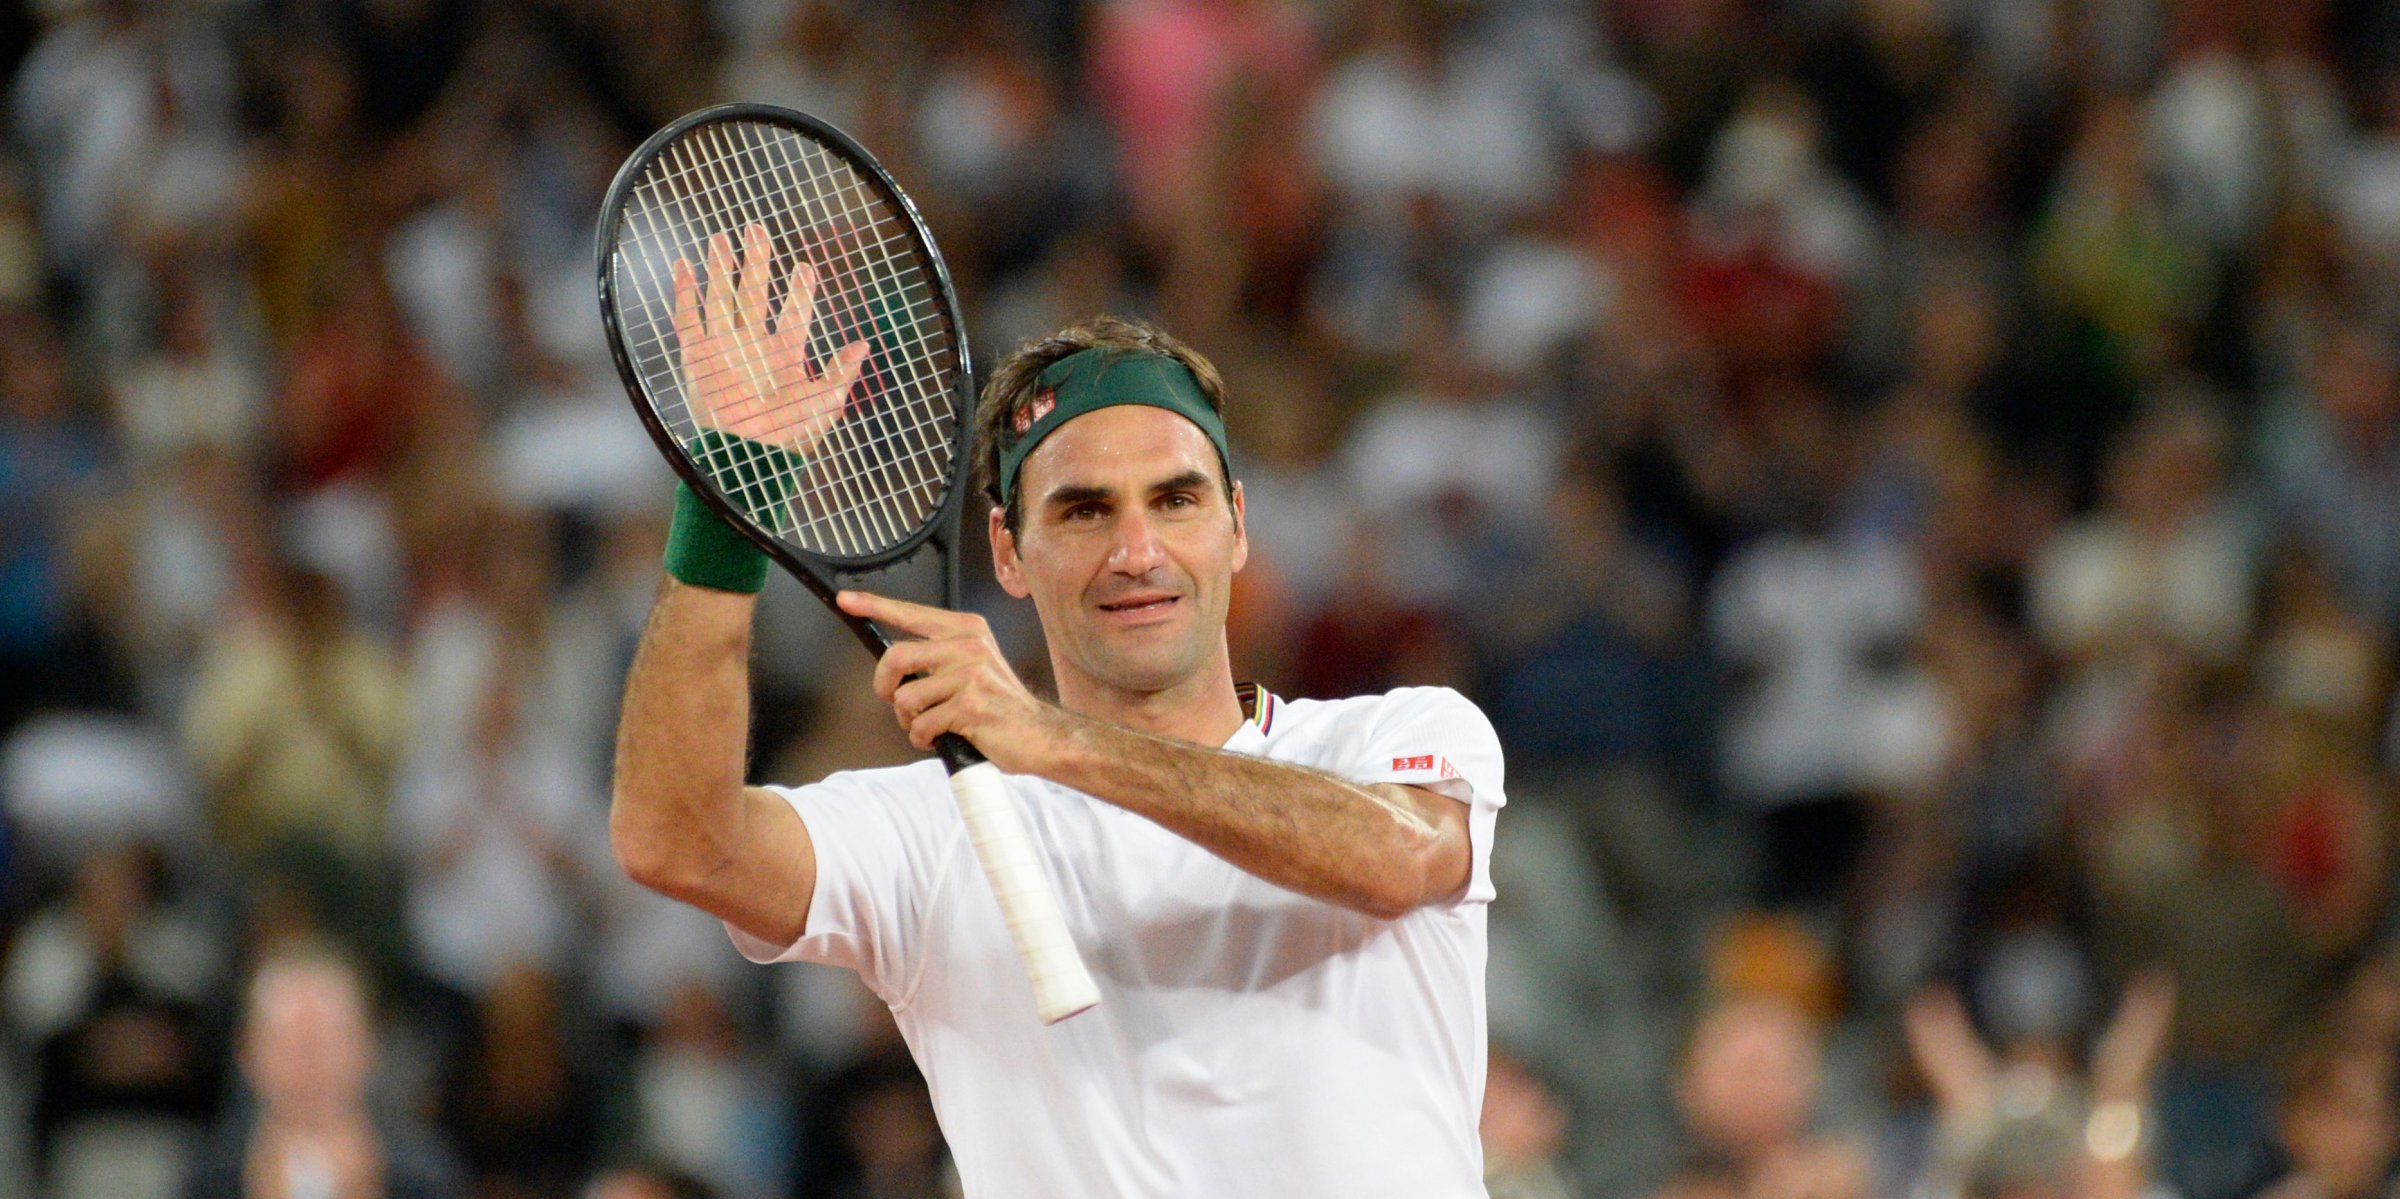 Federer tops list of world's highest-paid athletes, earning $106